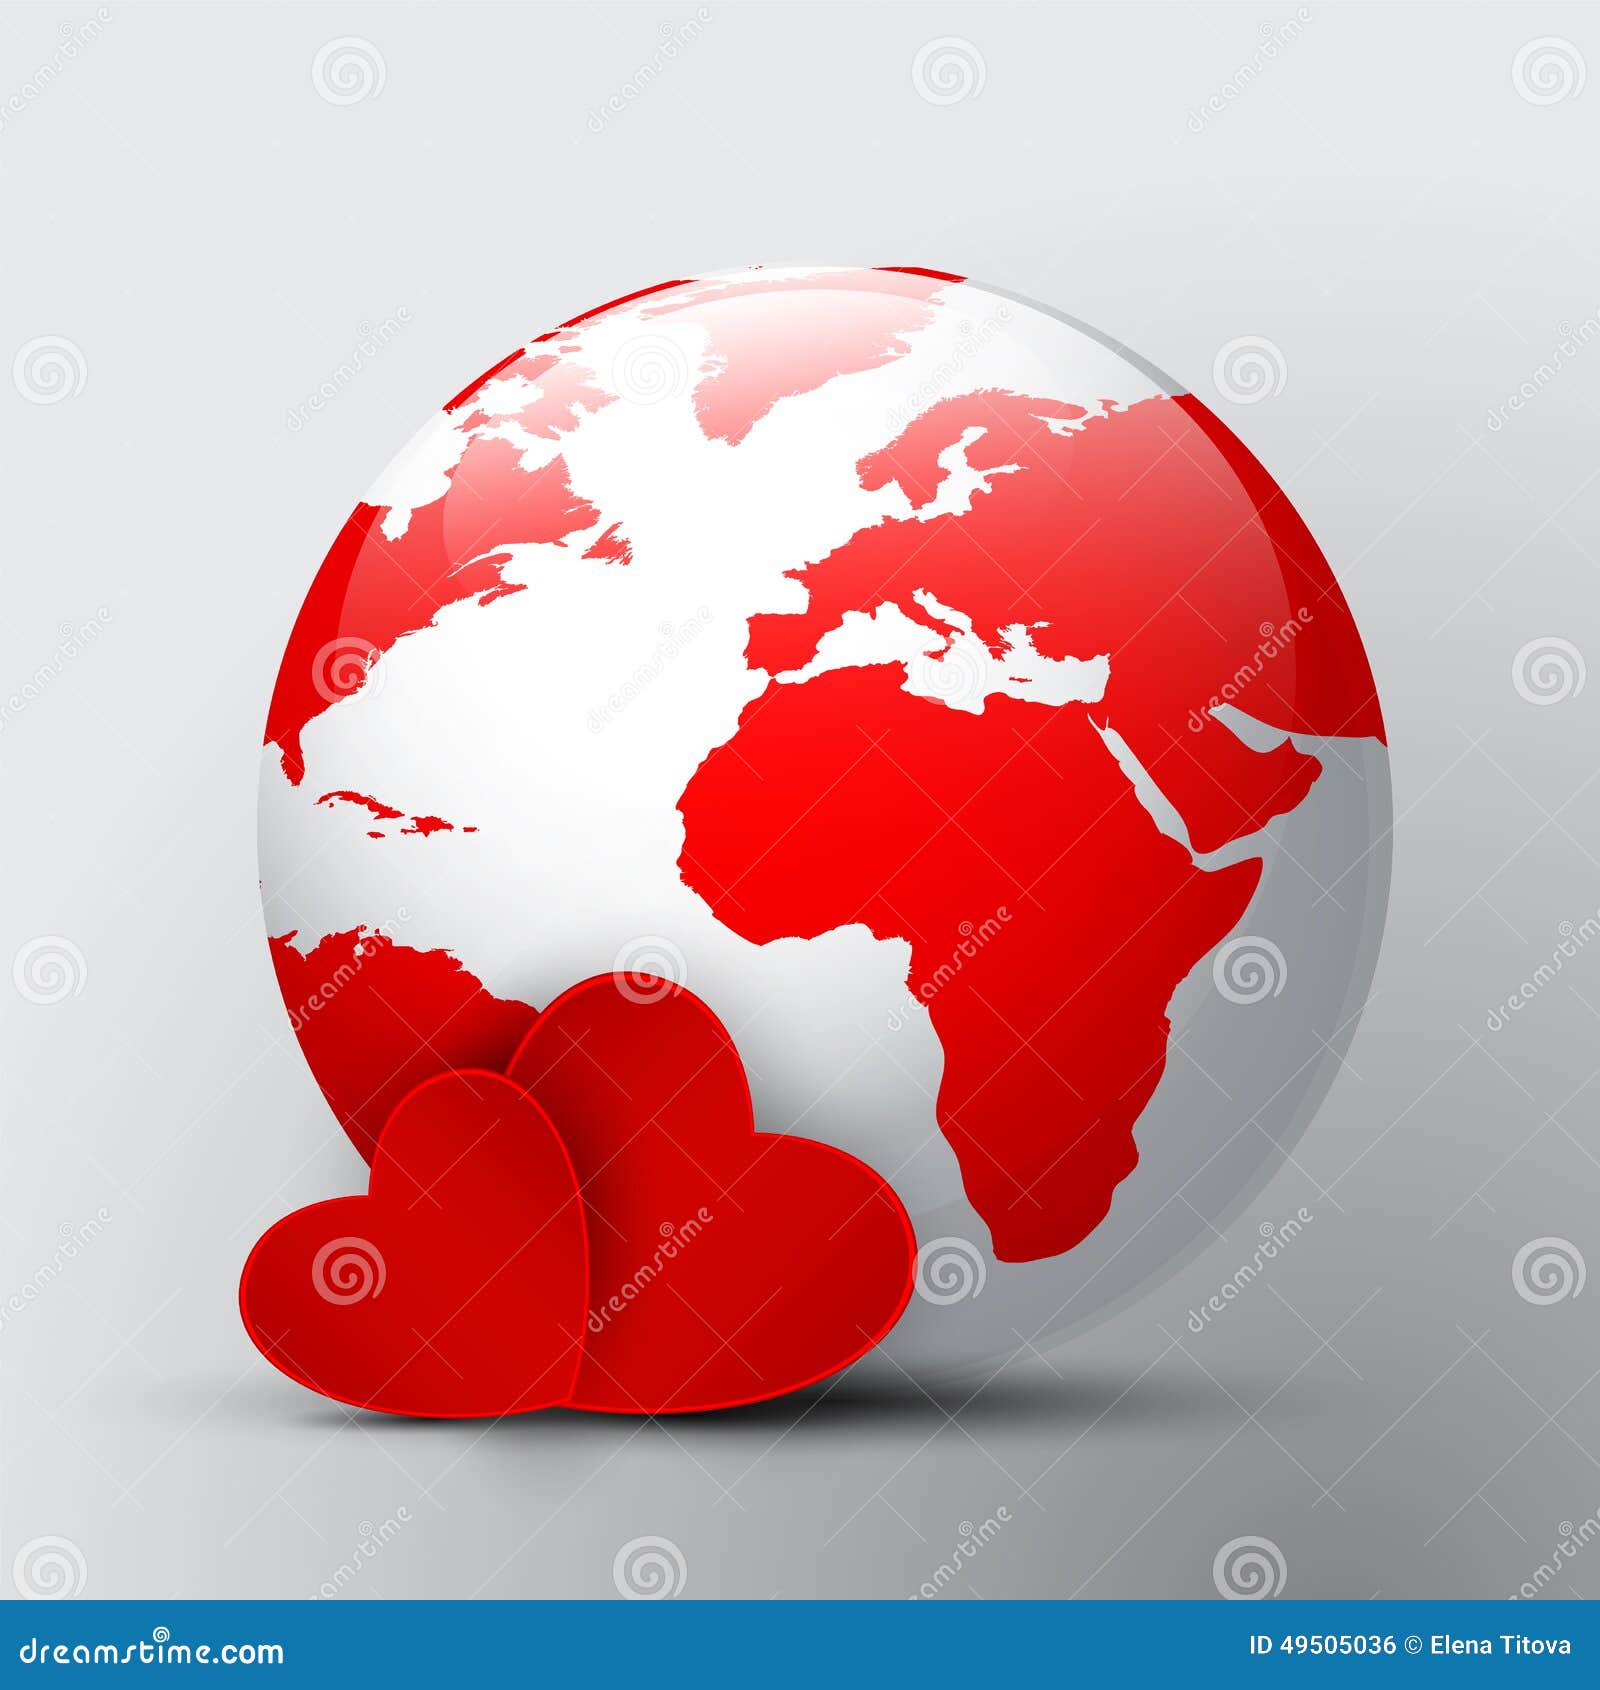 Love in the world stock vector. Illustration of global - 49505036